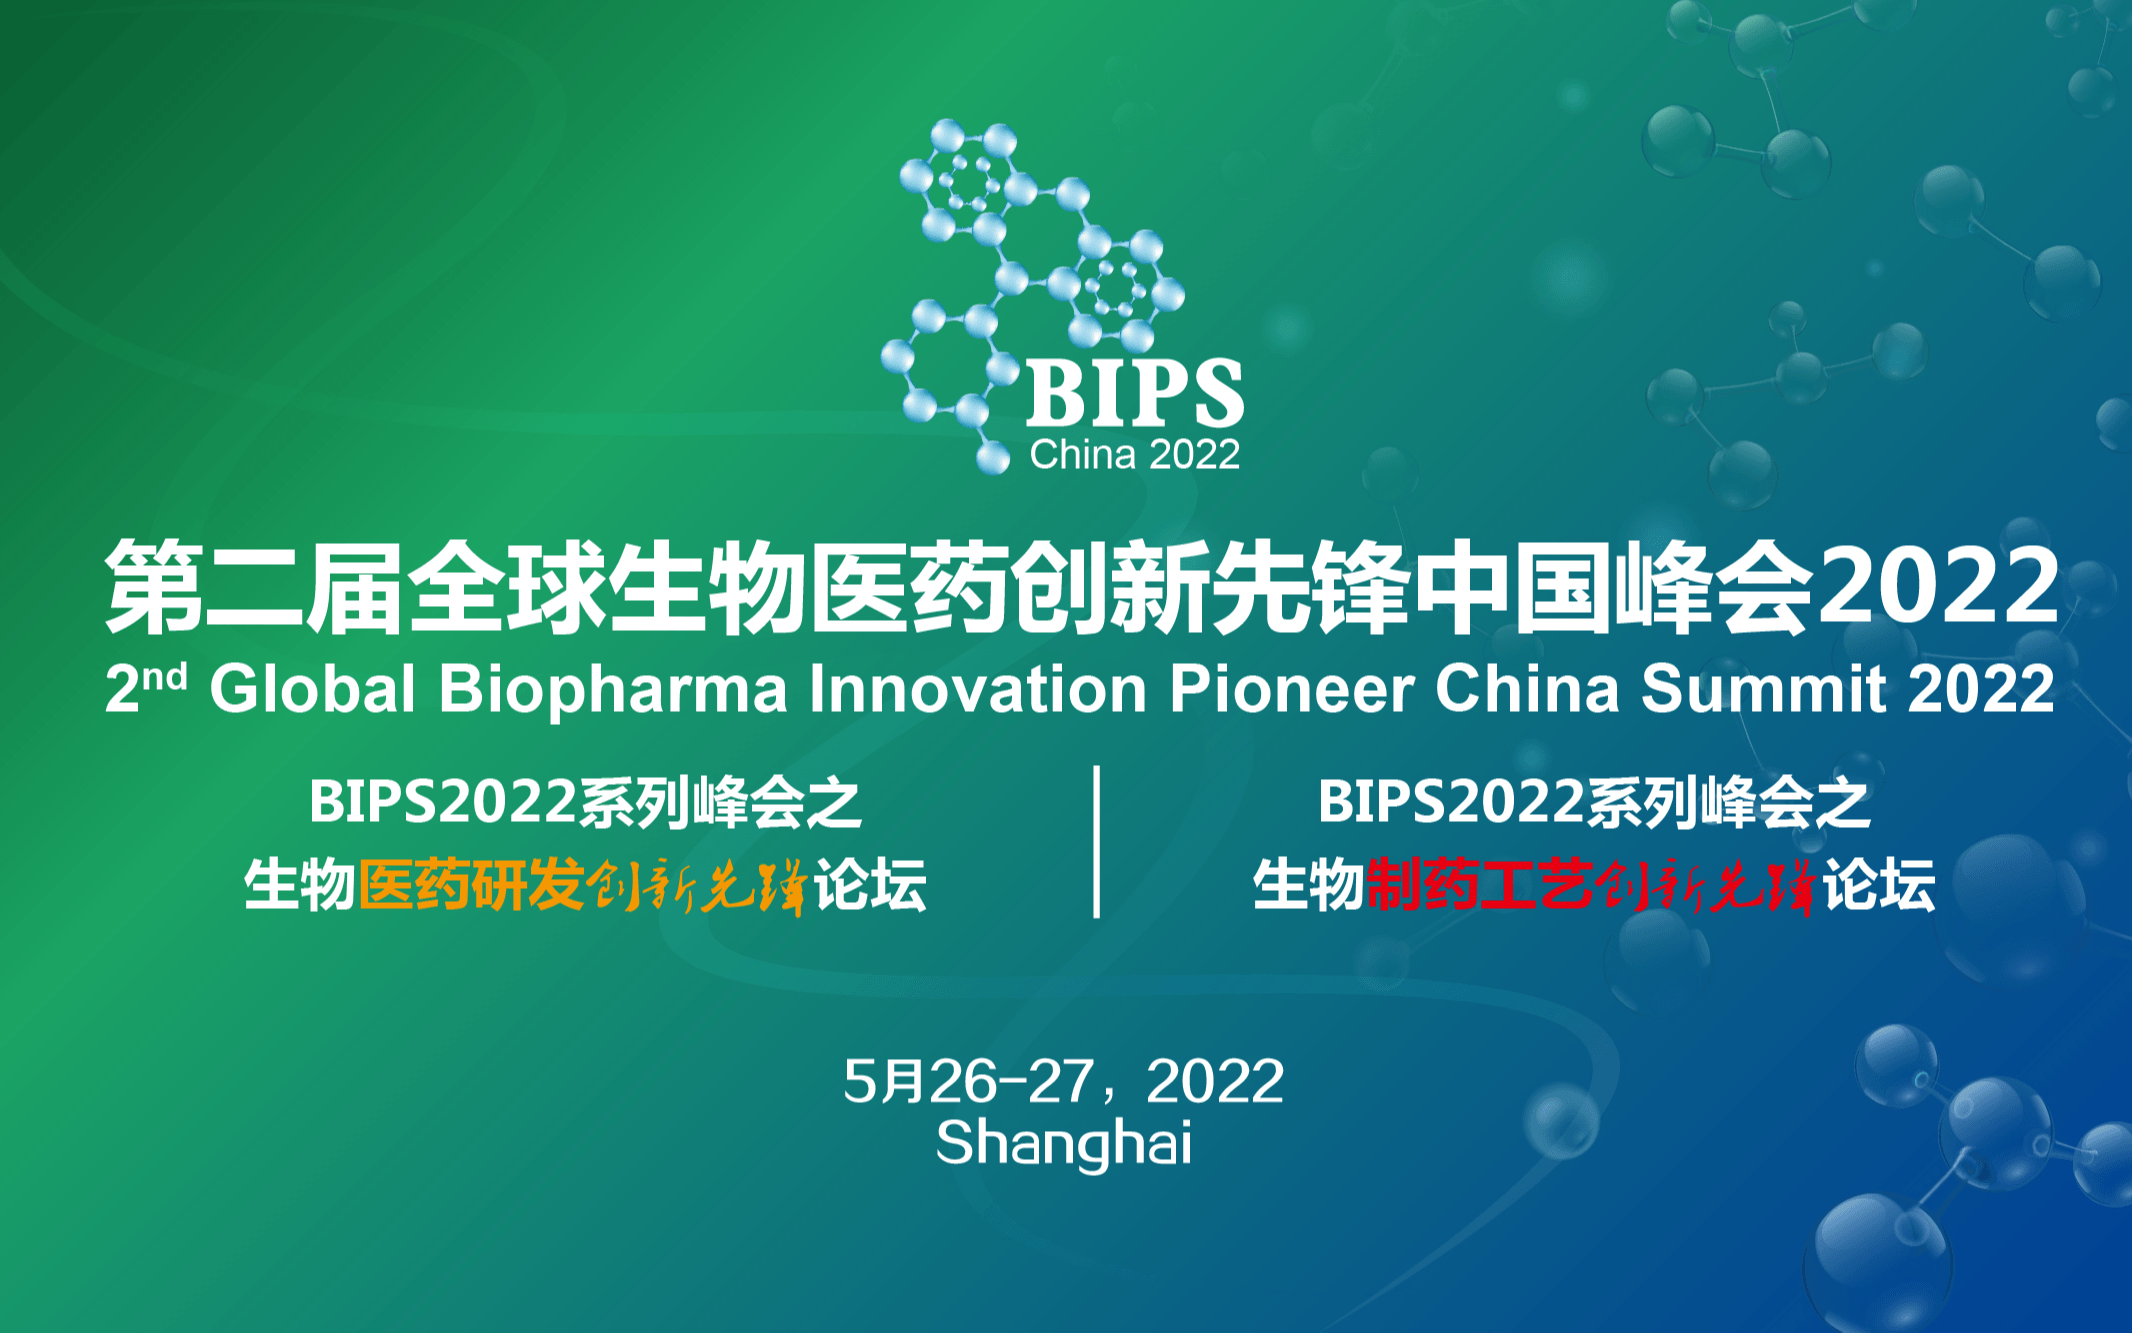 BIPS 全球生物医药创新先锋中国峰会2022